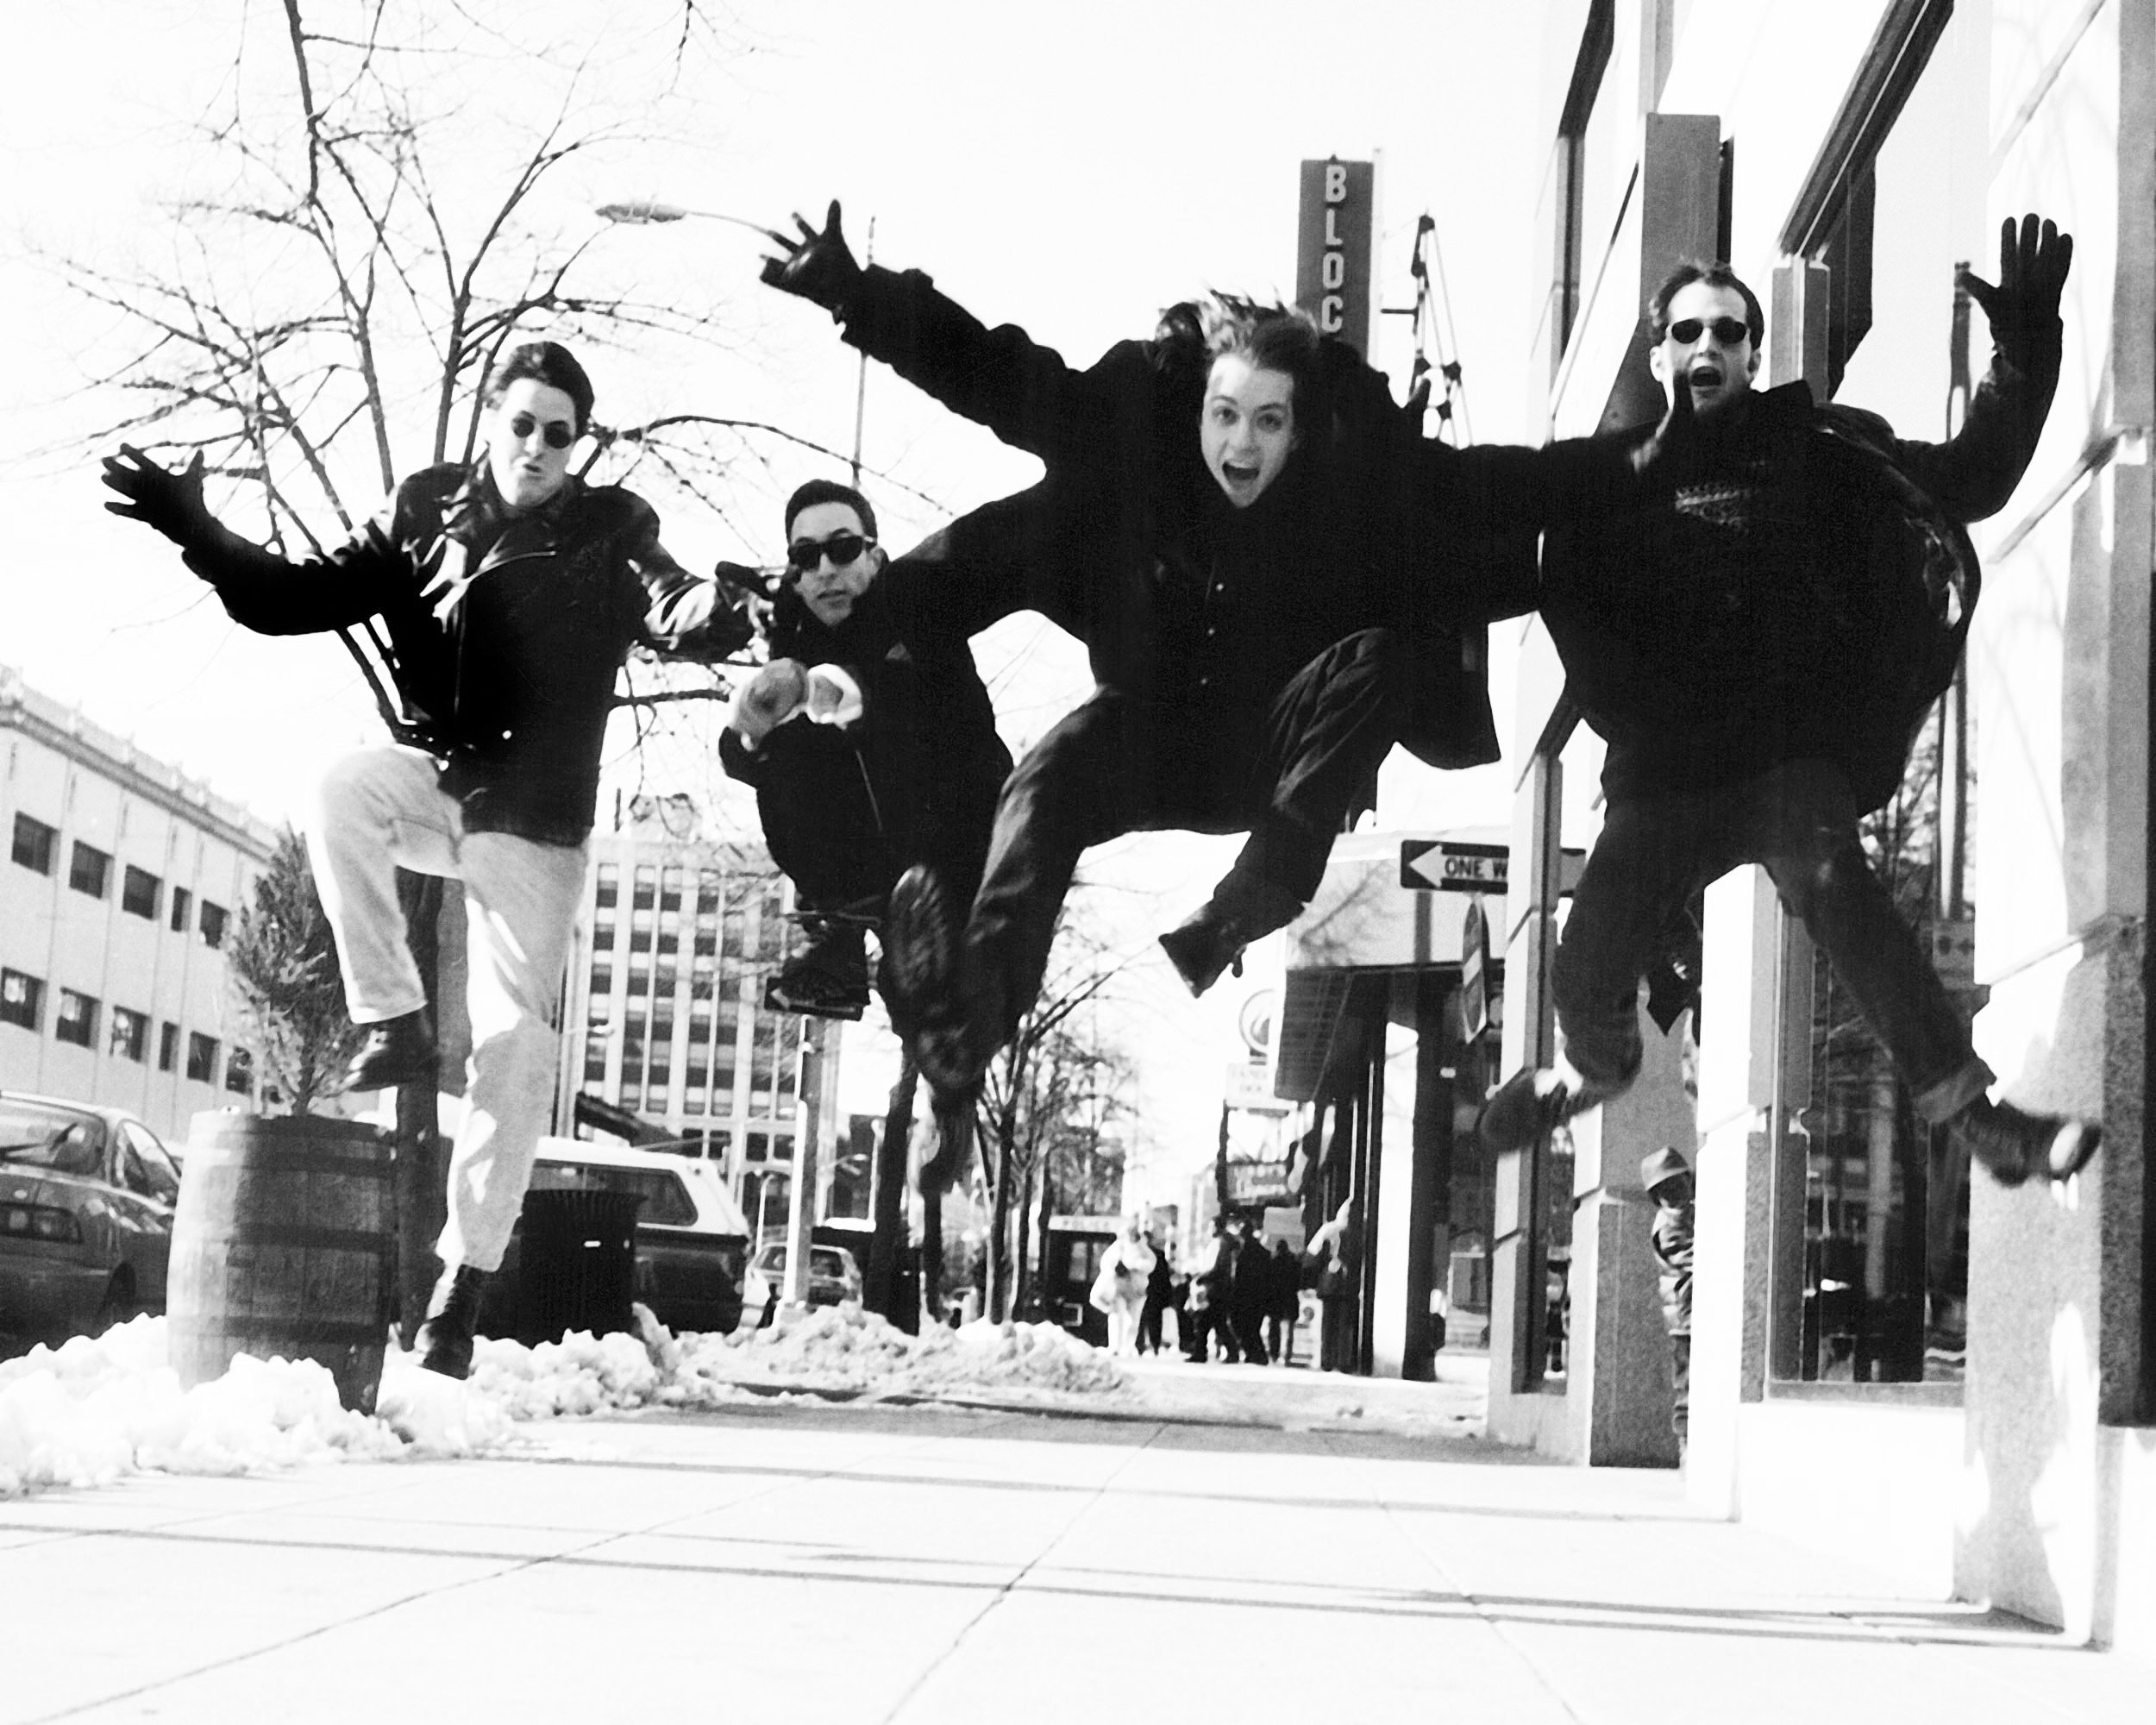   The Eddies  (Sam Longley, Jeff Mellin, Jake Guralnick, and Jack Dean) in Central Square, Cambridge, MA, 1994. (Photo by Brian Corbett) 